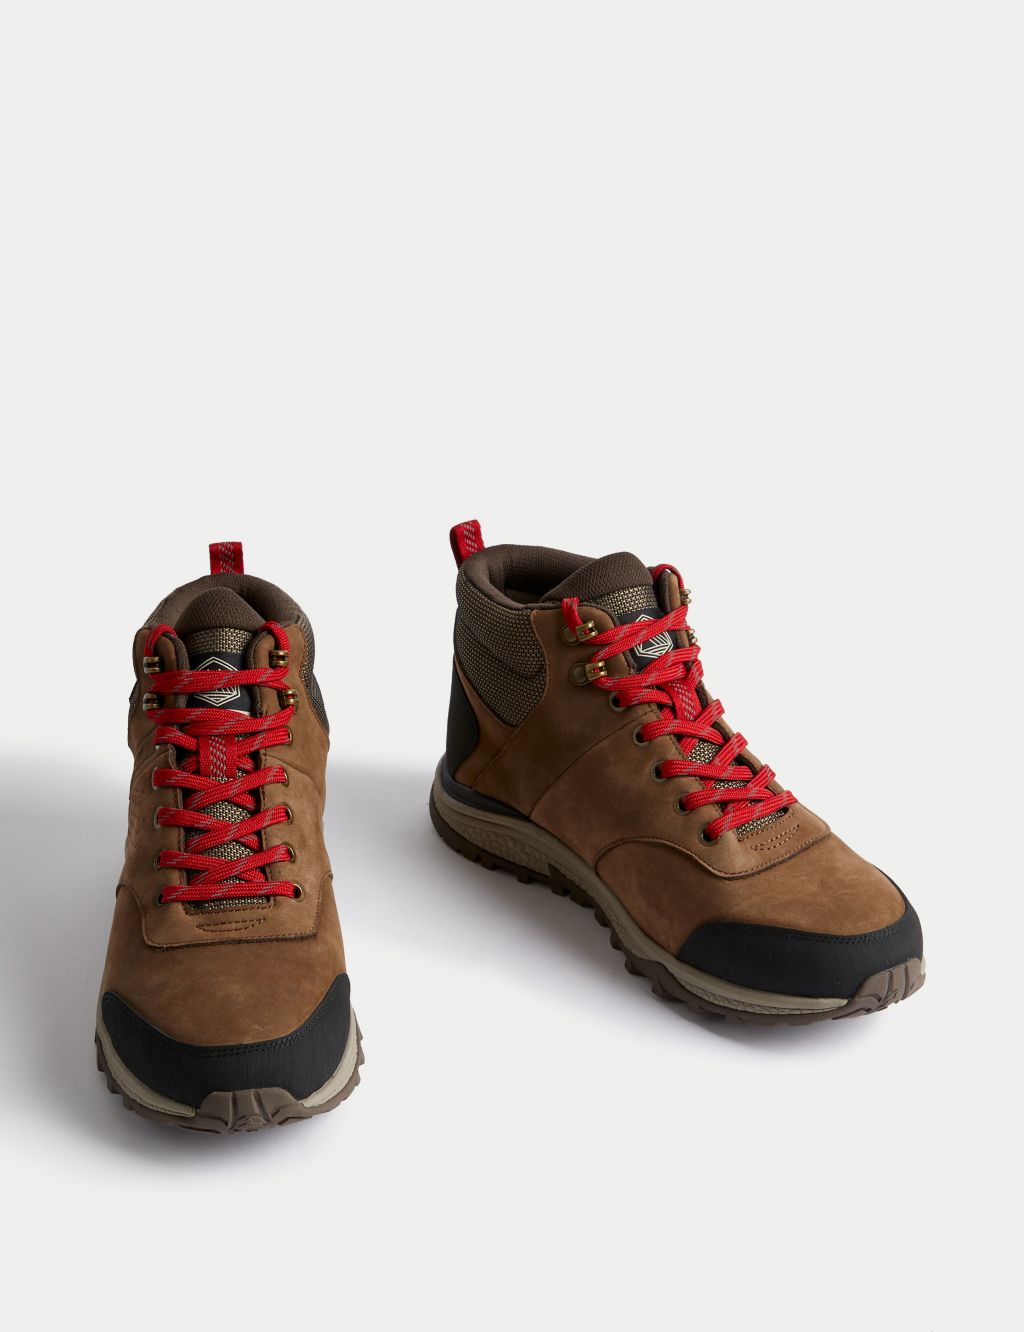 Leather Waterproof Walking Boots image 2